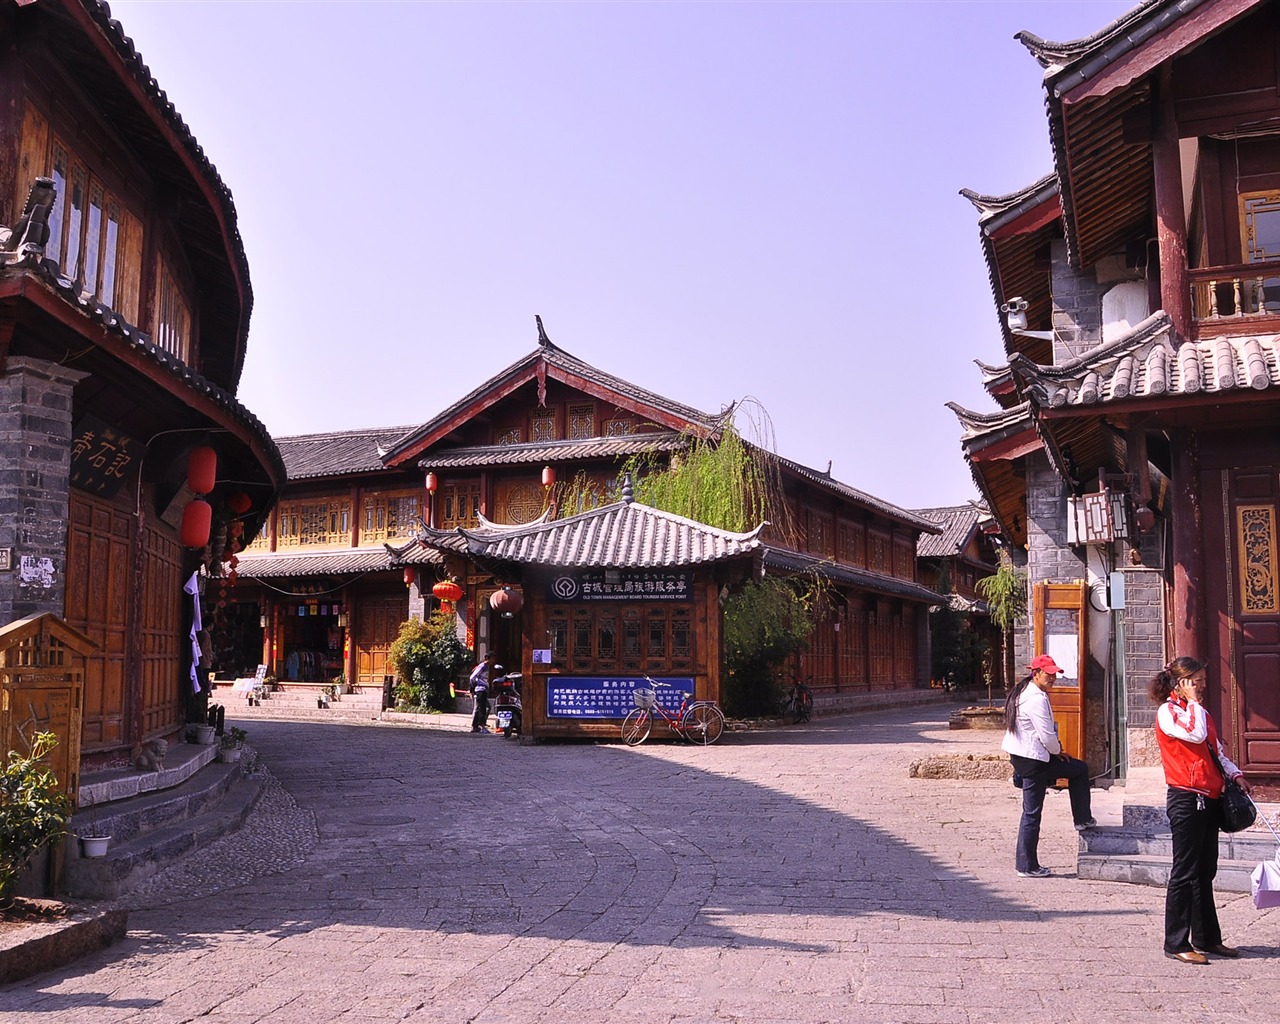 Lijiang ancient town atmosphere (2) (old Hong OK works) #15 - 1280x1024